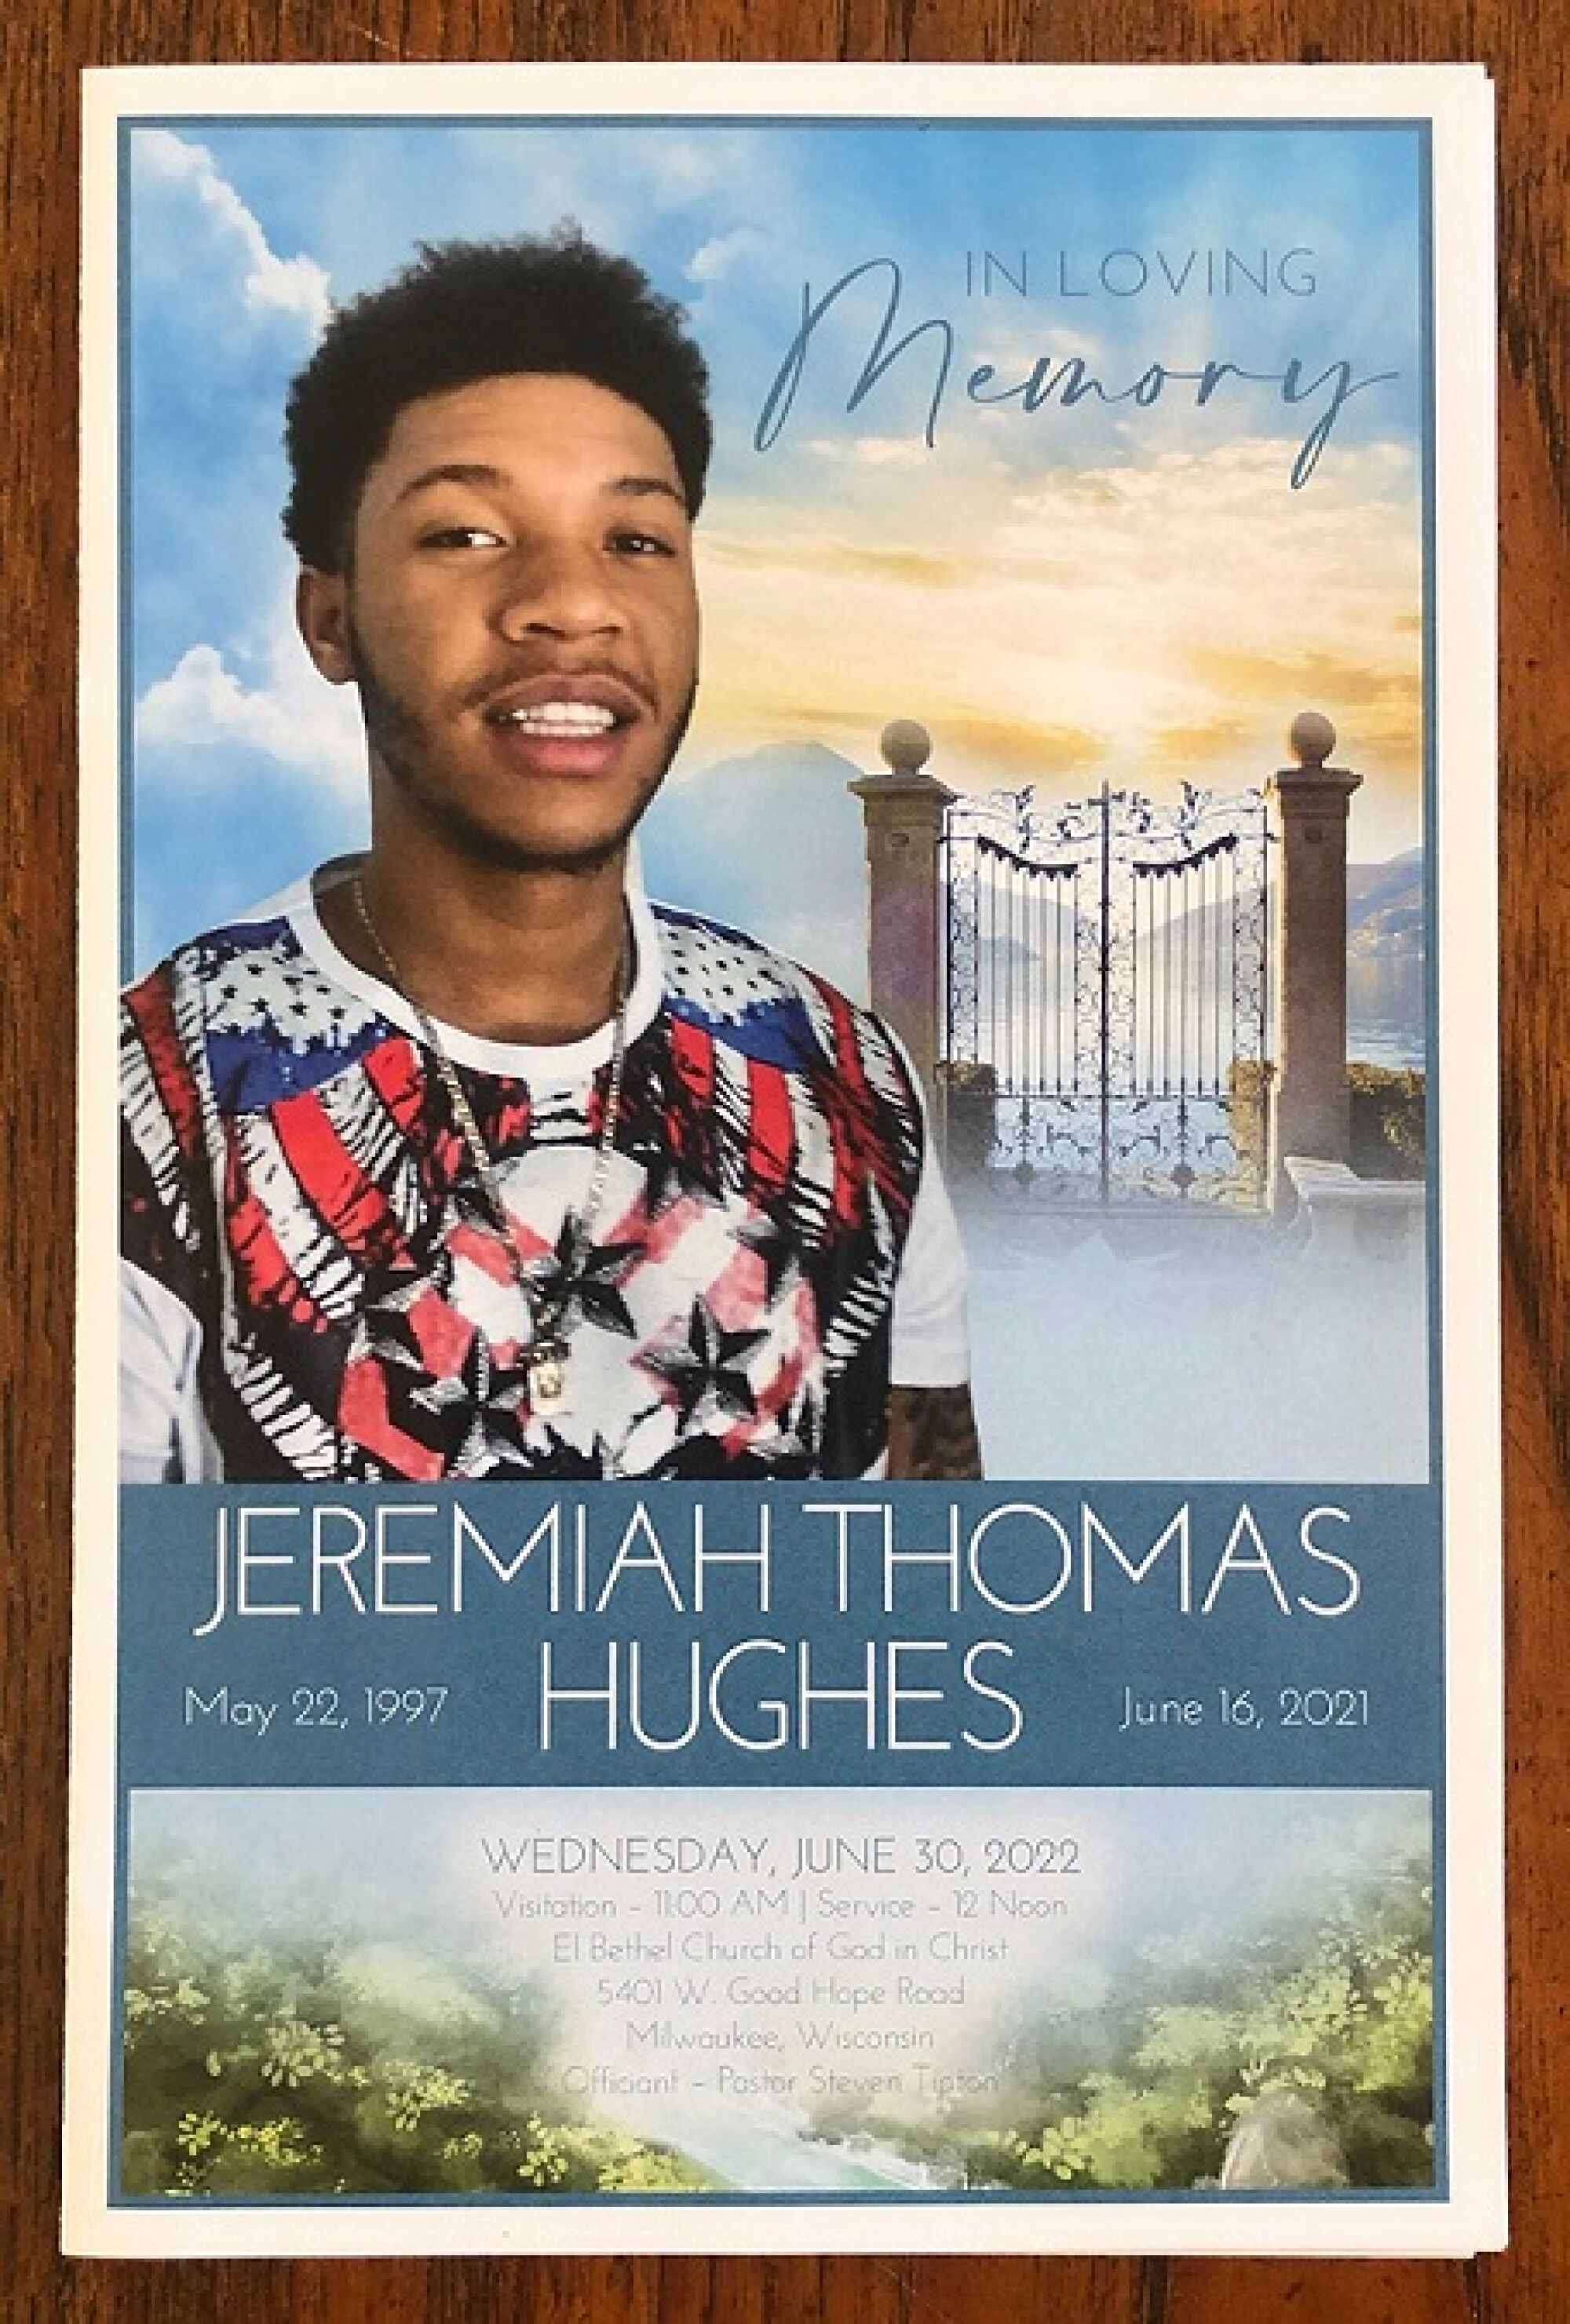 Jeremiah Hughes' obituary